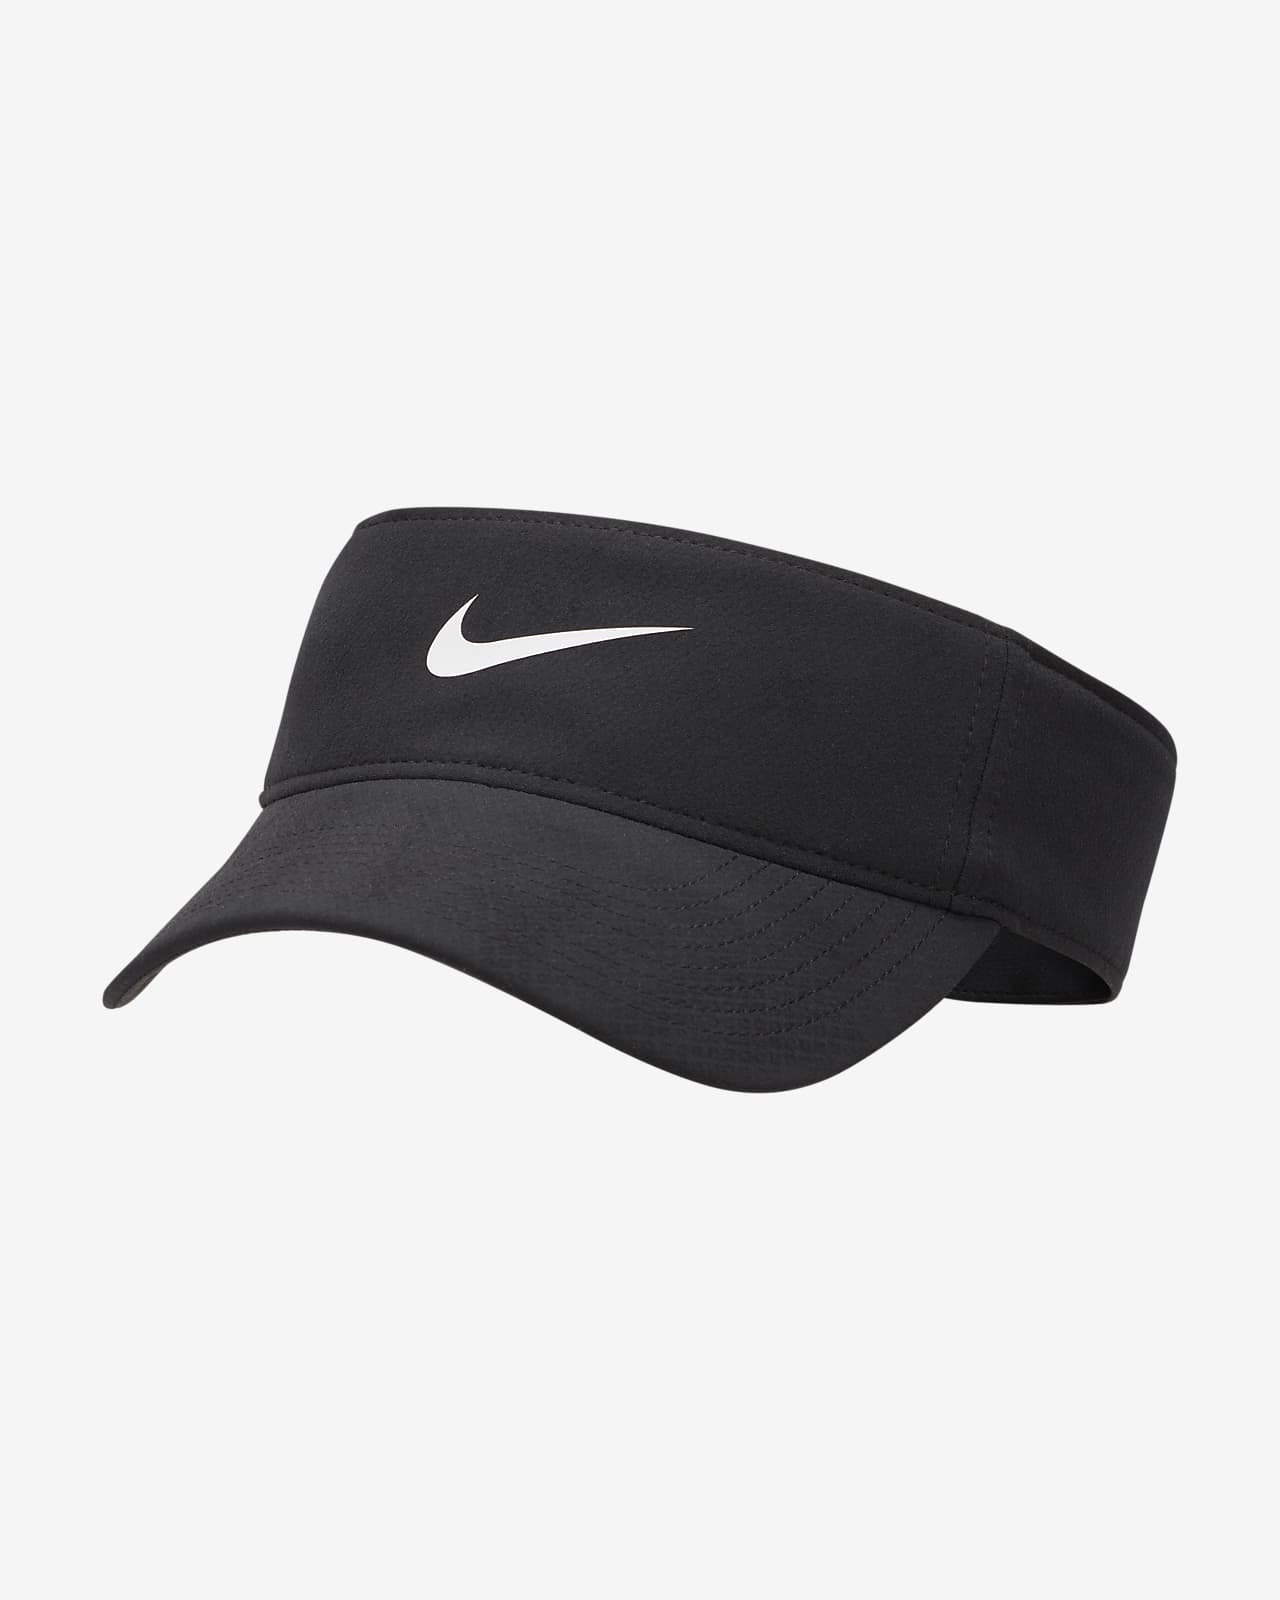 Nike Dri-FIT Ace solskjerm med Swoosh-logo